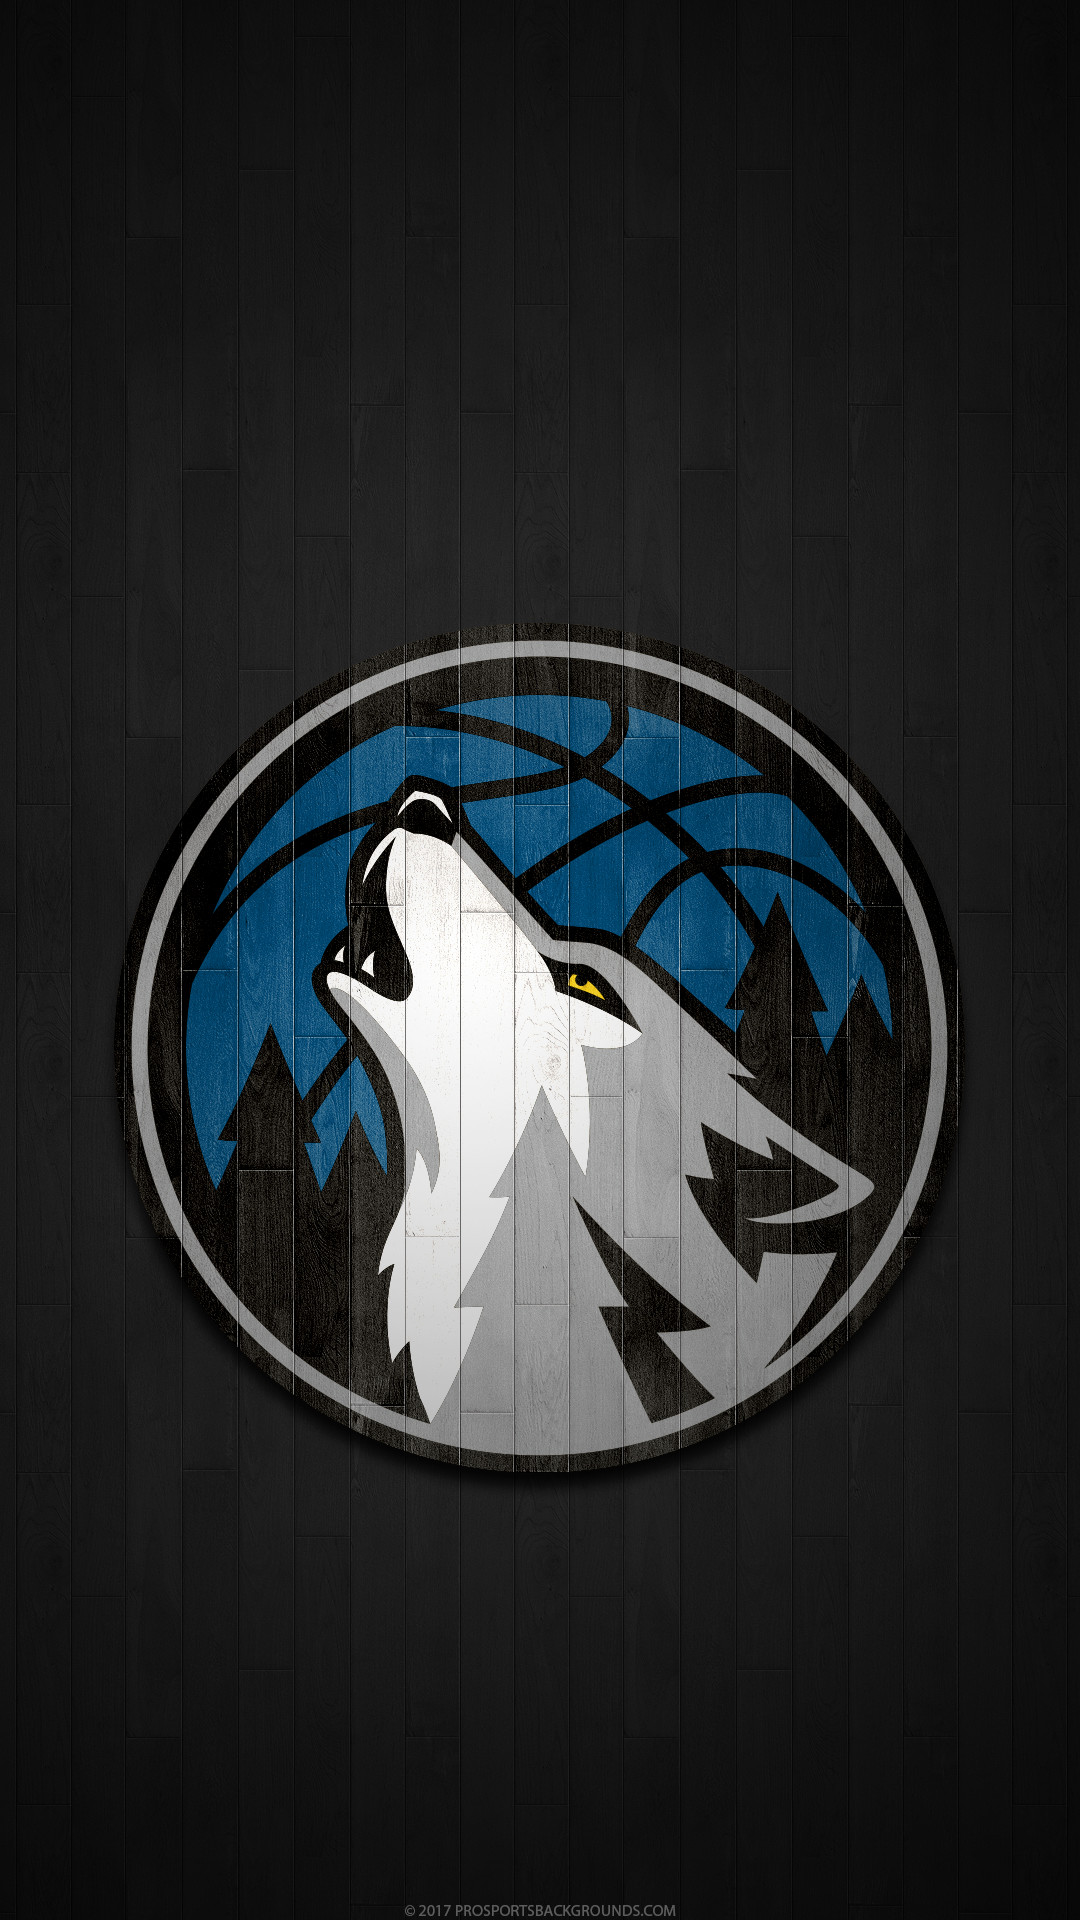 1080x1920 Minnesota Timberwolves 2017 schedule hardwood nba basketball logo wallpaper  free iphone 5, 6, ...